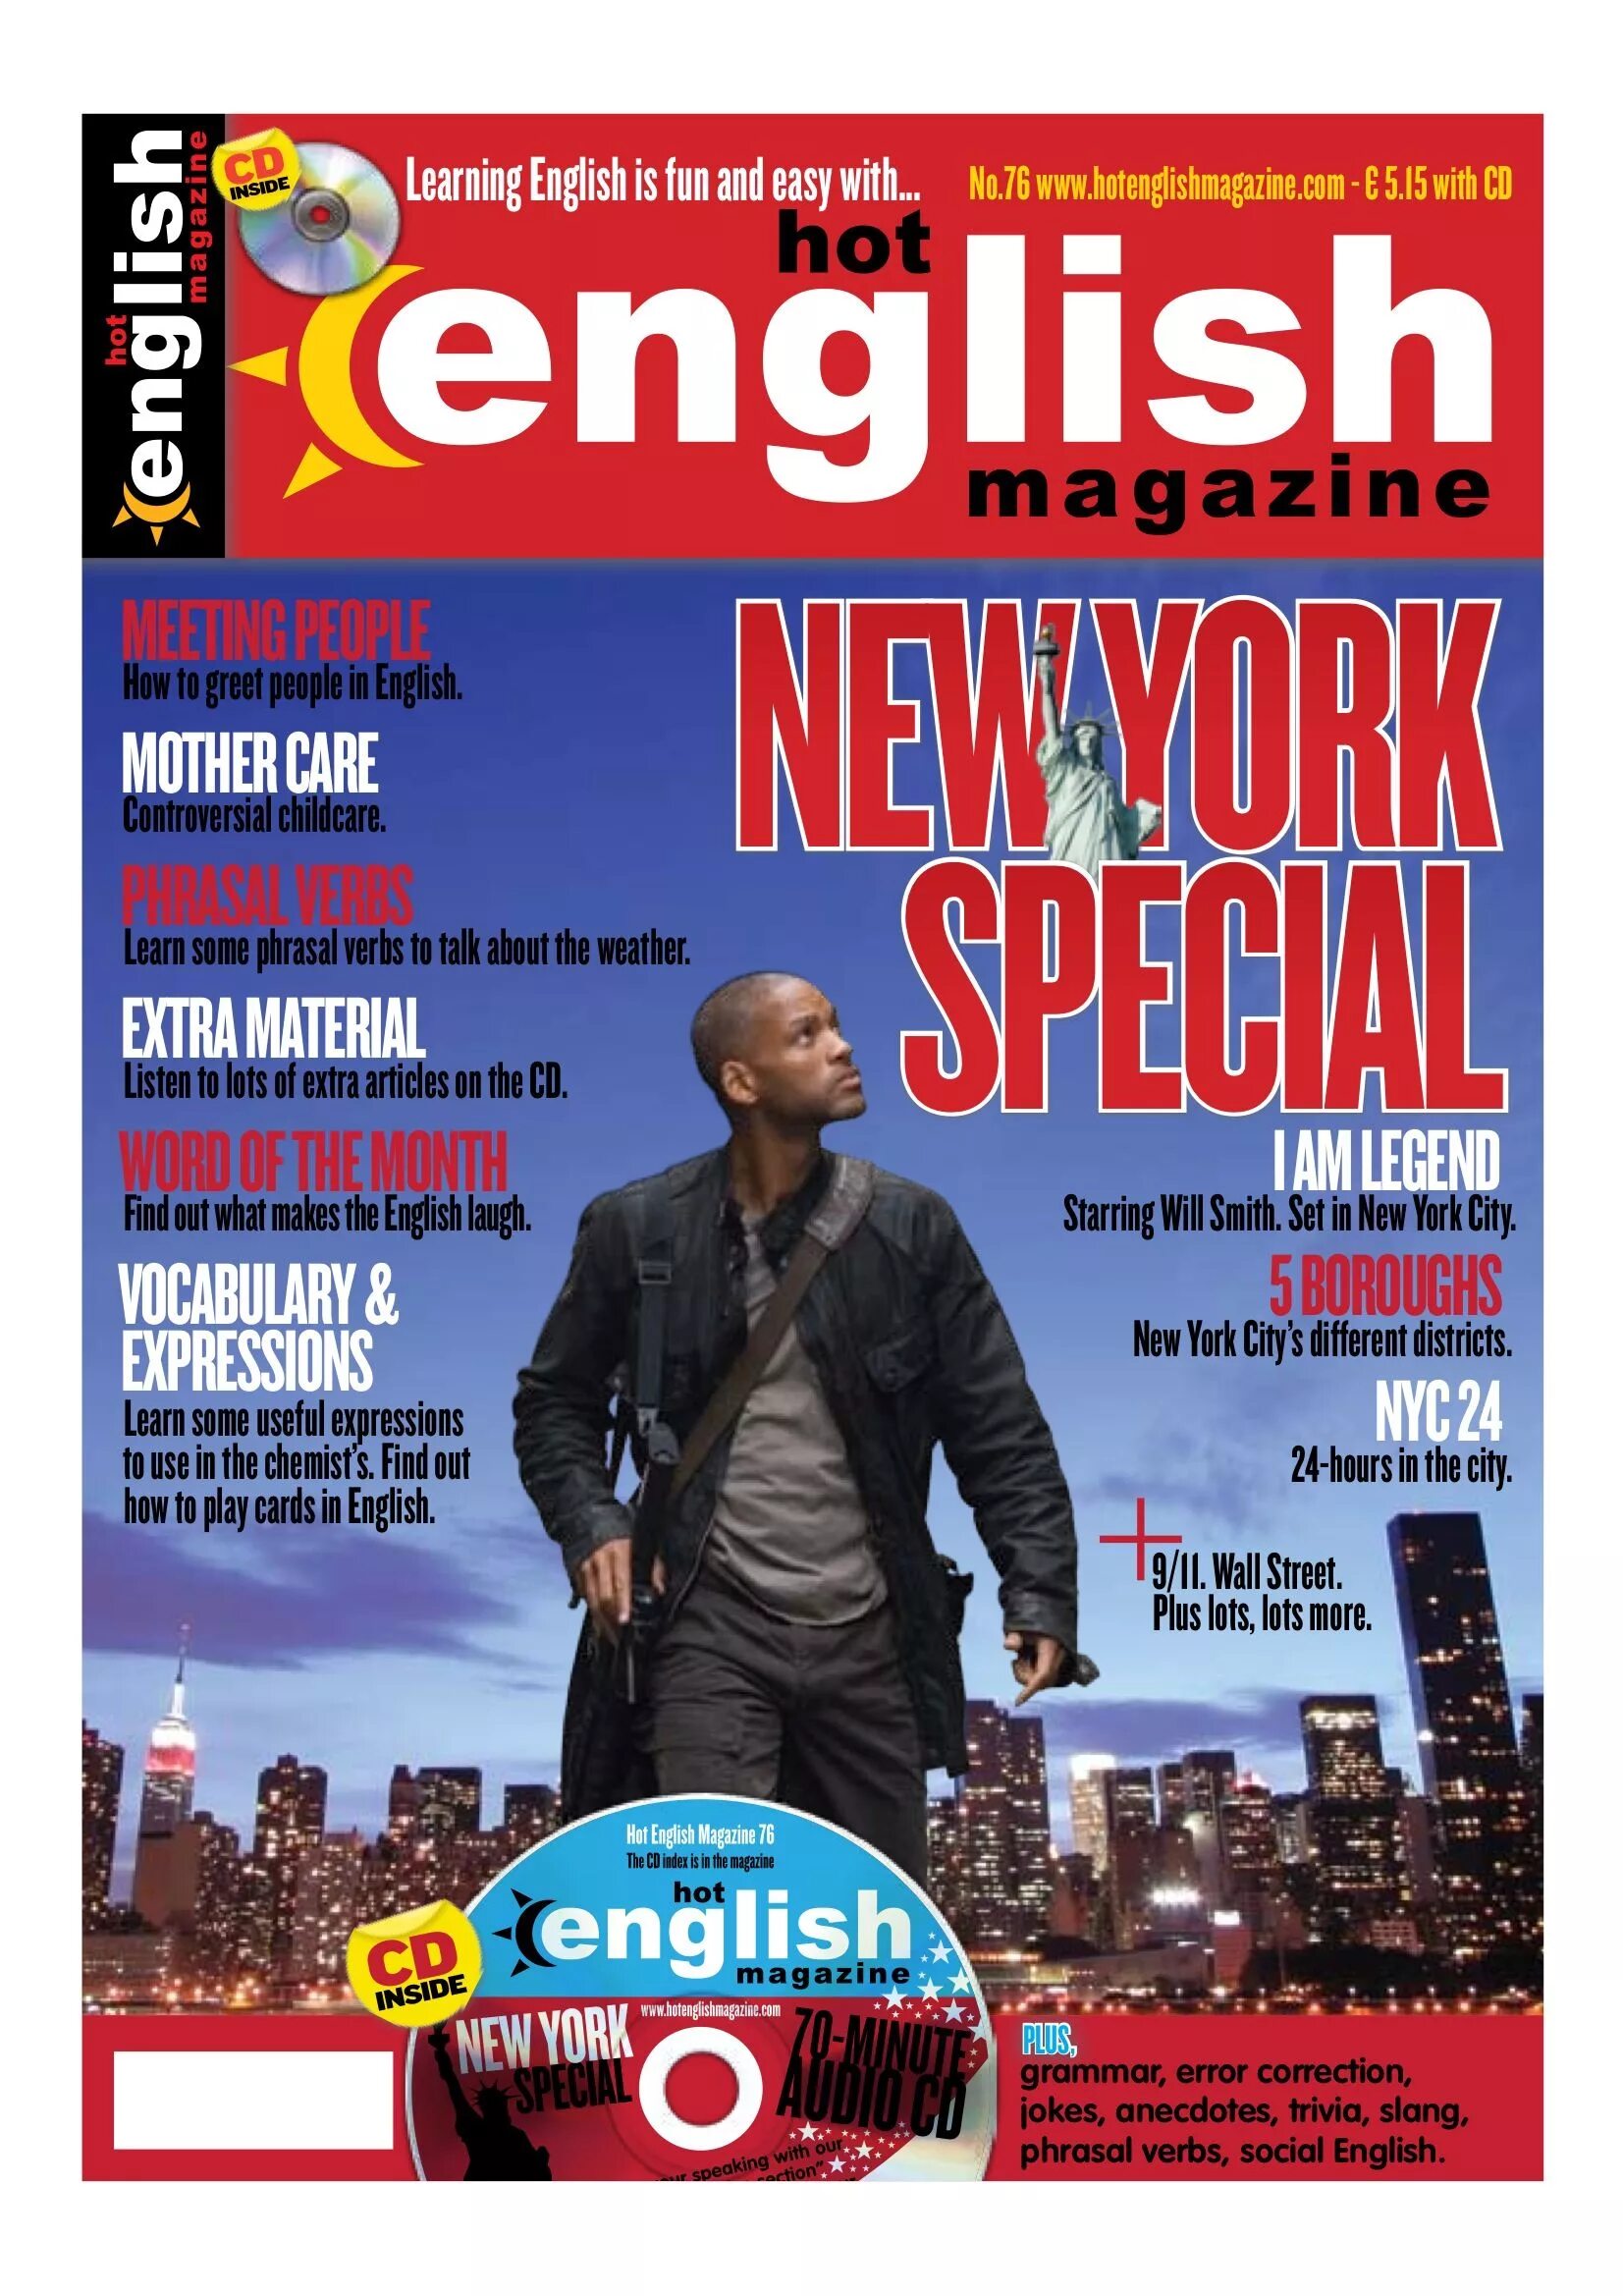 Magazines in english. Английские журналы. Популярный английский журнал. Журнал на английском языке. Английские журналы на английском.